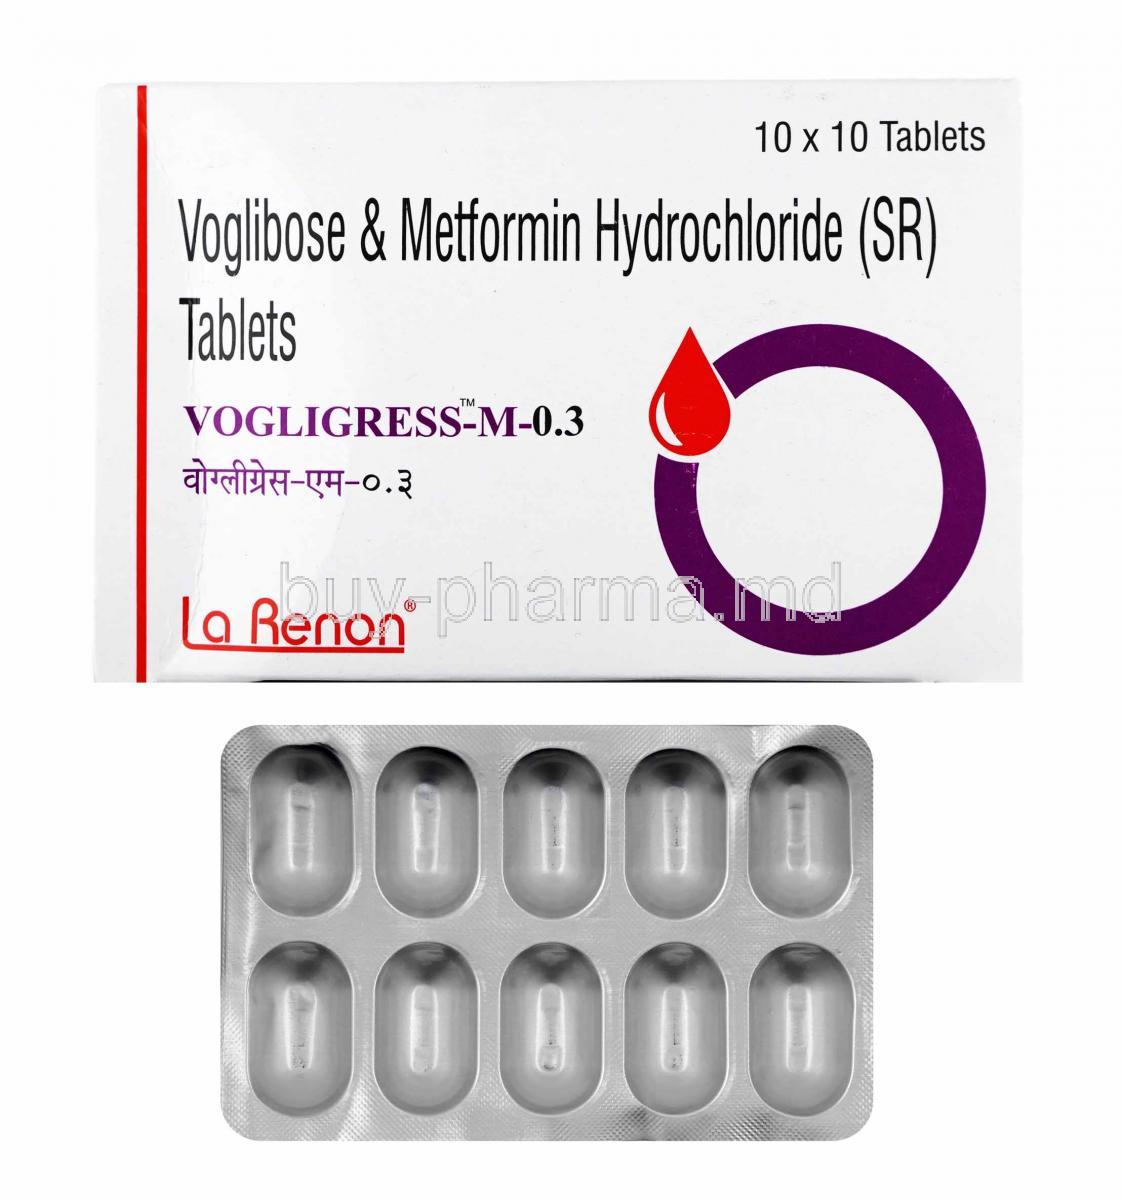 Vogligress-M, Metformin and Voglibose 0.3mg box and tablets